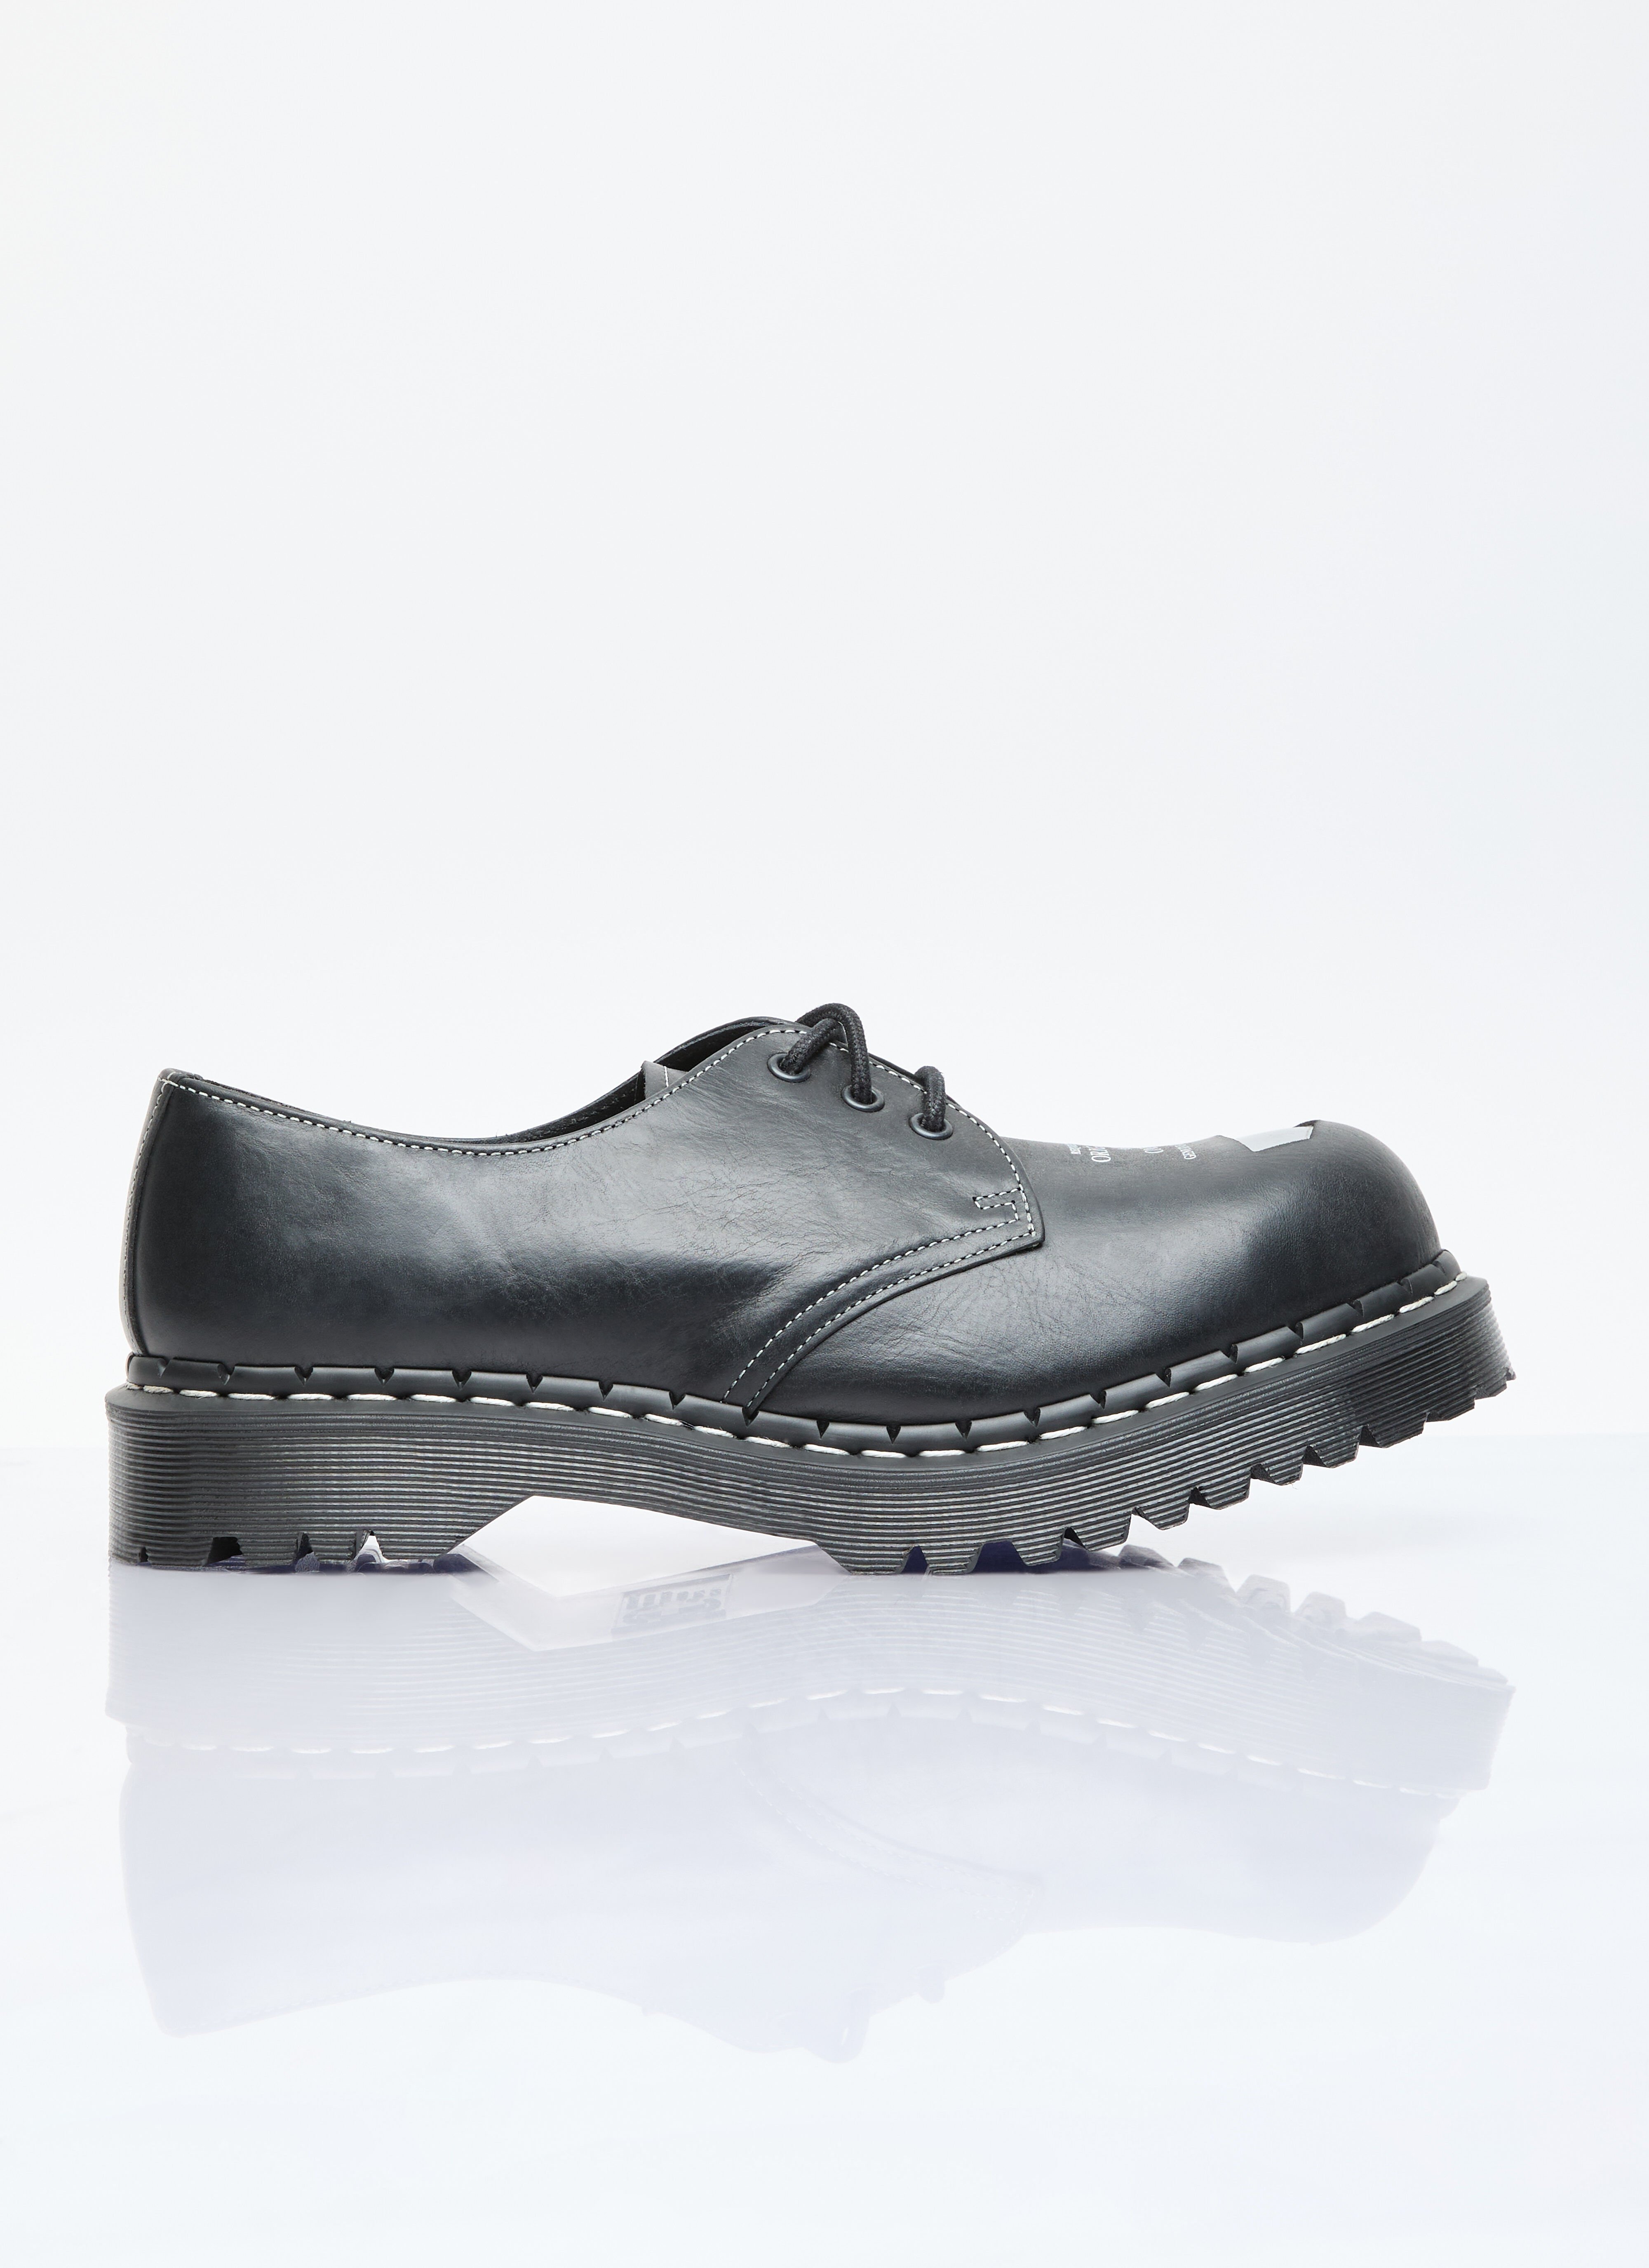 Rick Owens x Dr. Martens 1461 Bex Overdrive 皮鞋  黑色 rod0156002